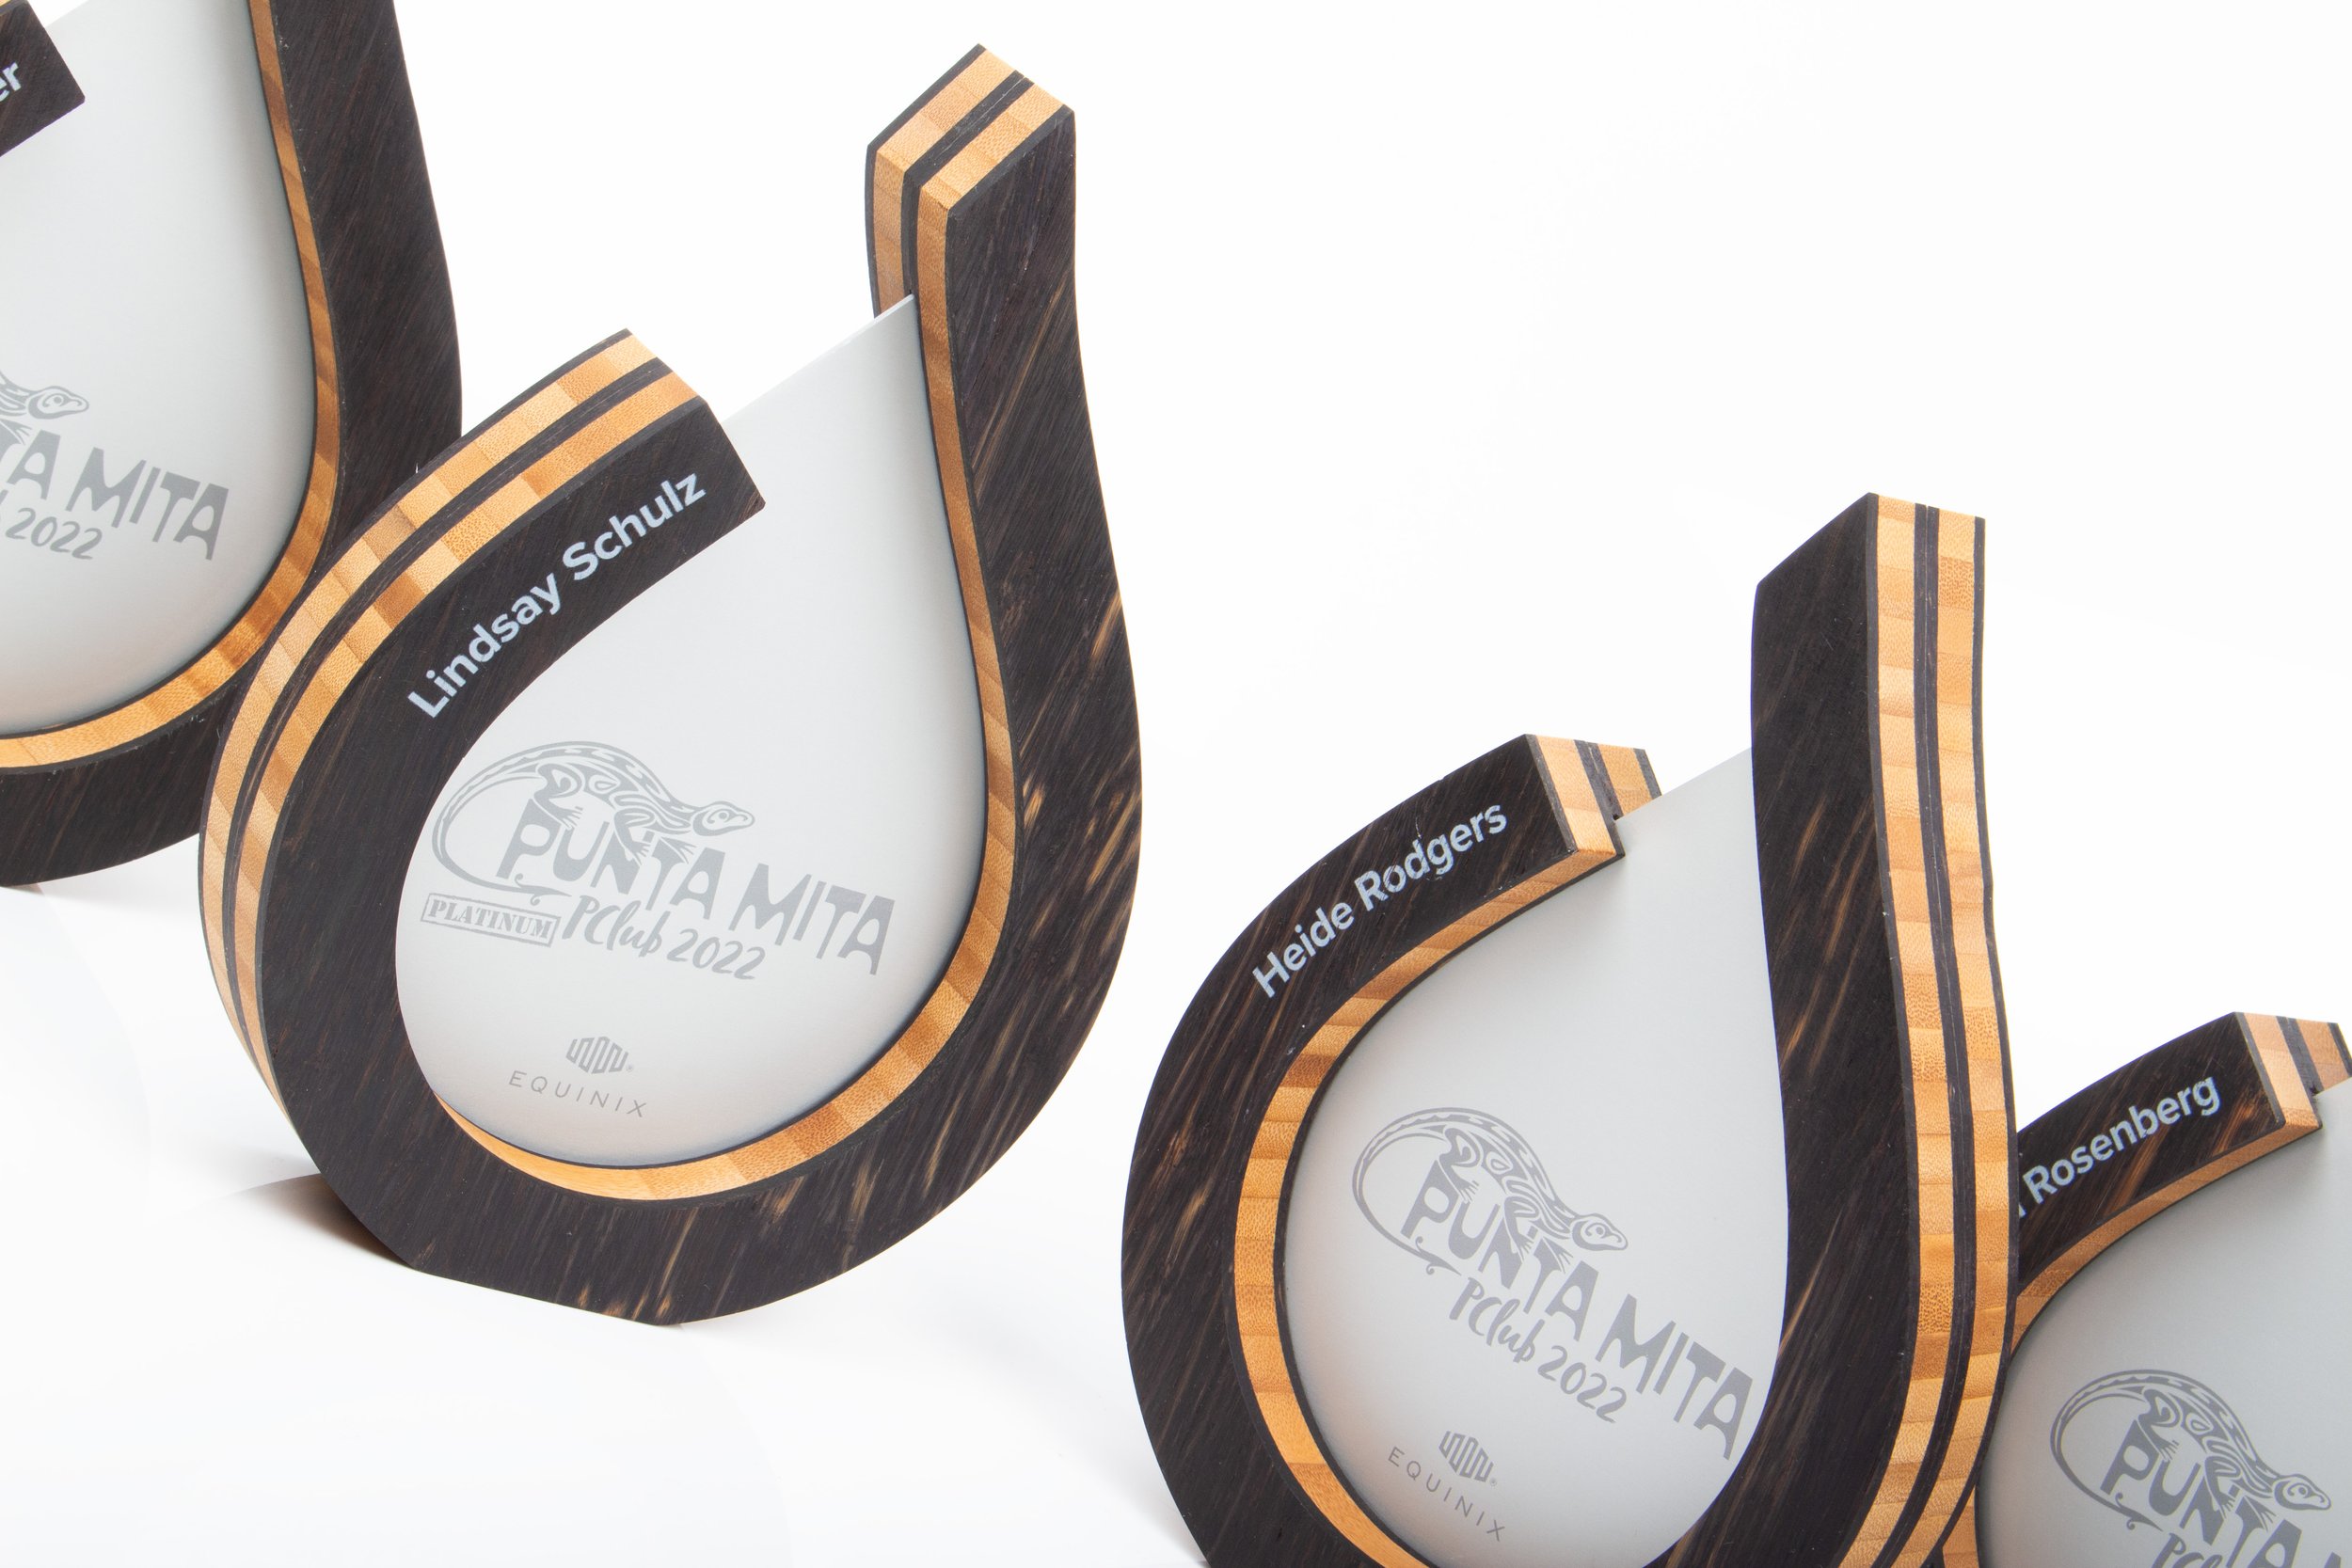 Bespoke custom President's club bamboo awards for Equinix